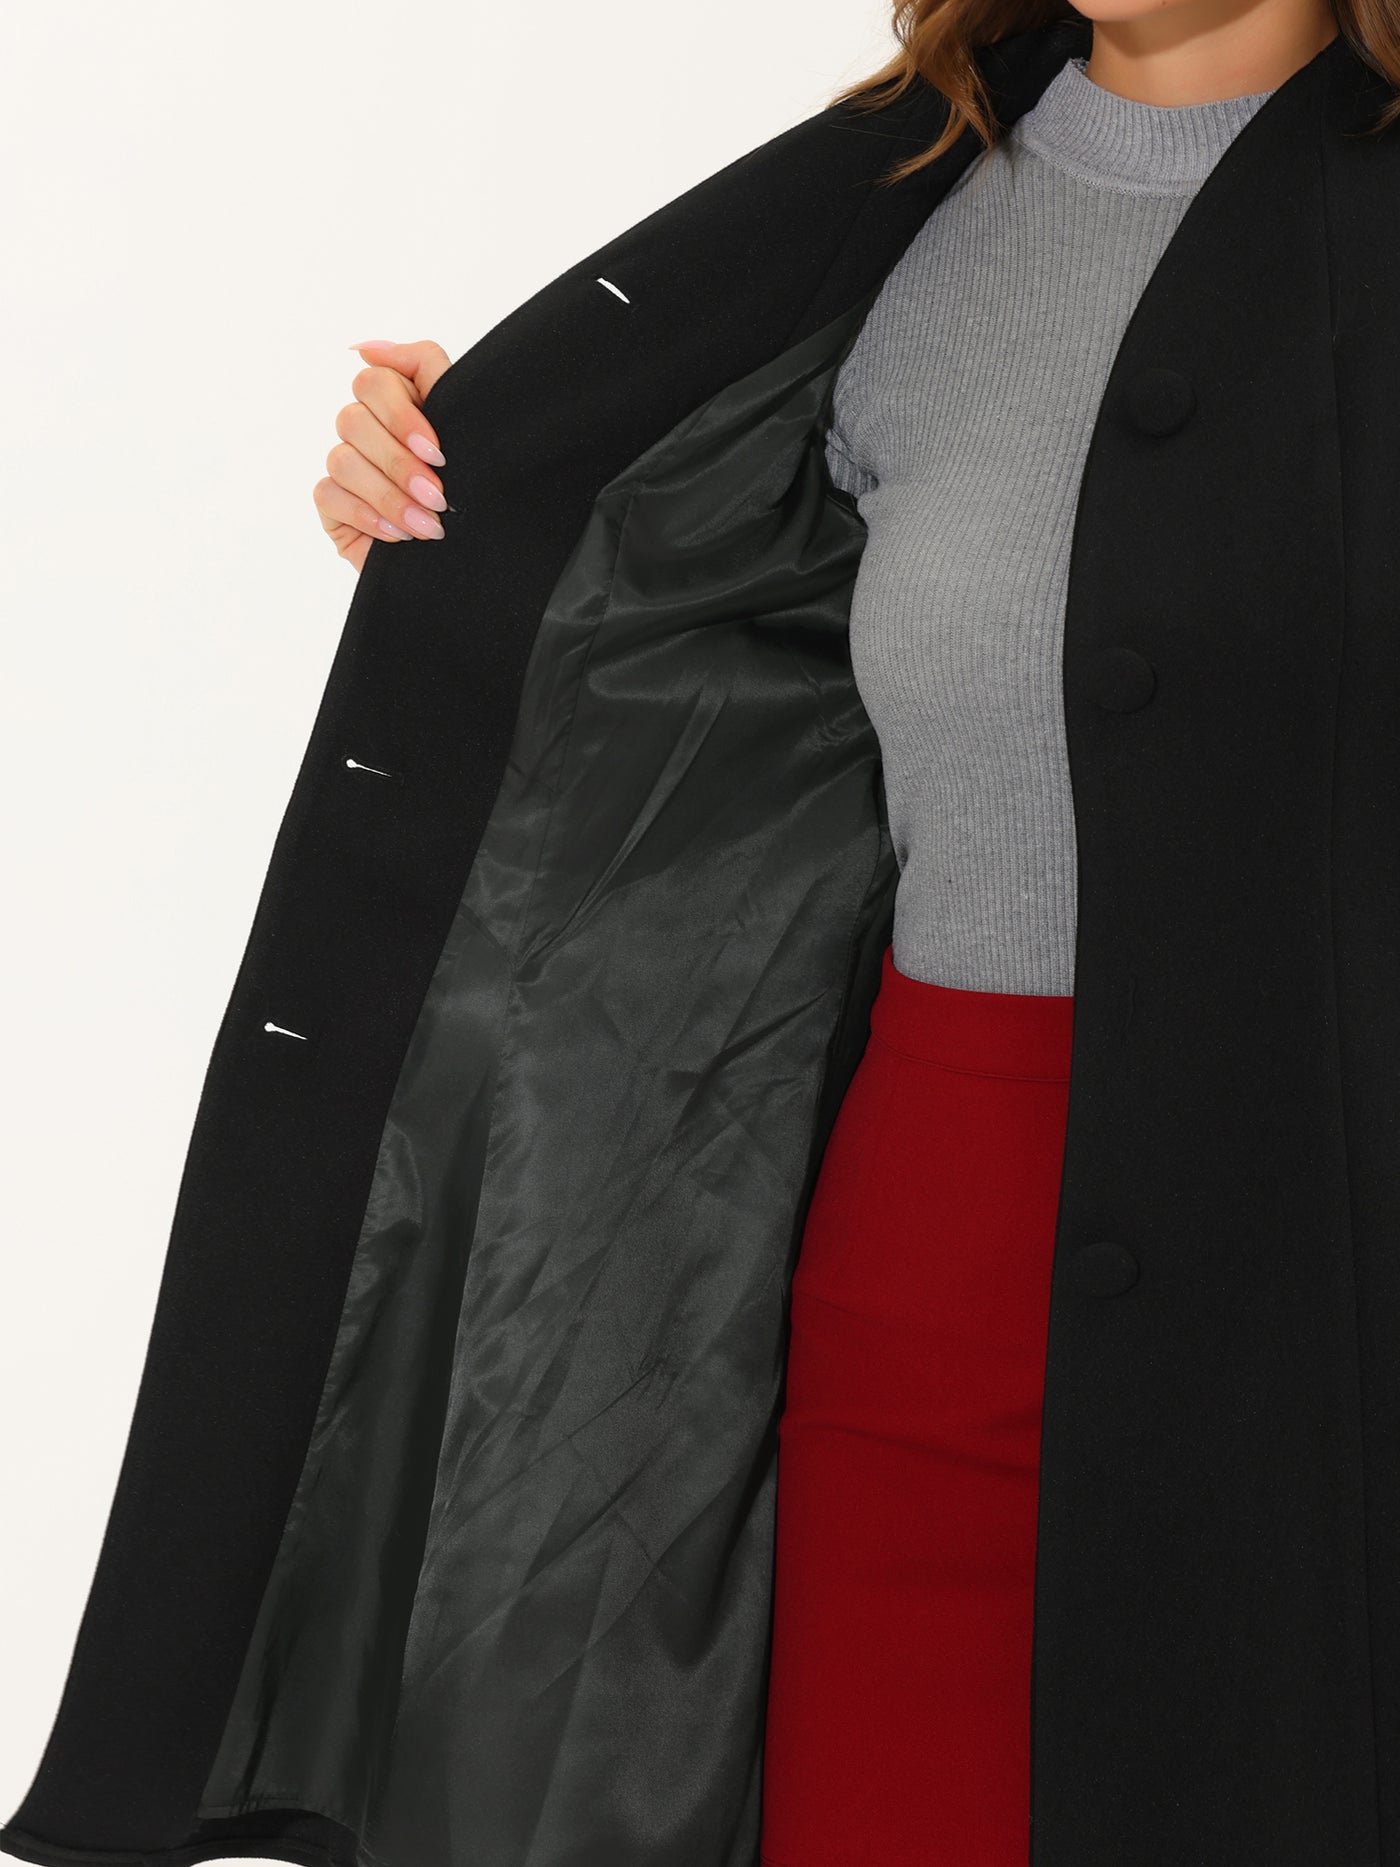 Allegra K Single Breasted Long Sleeve Mid-Long Winter Coat